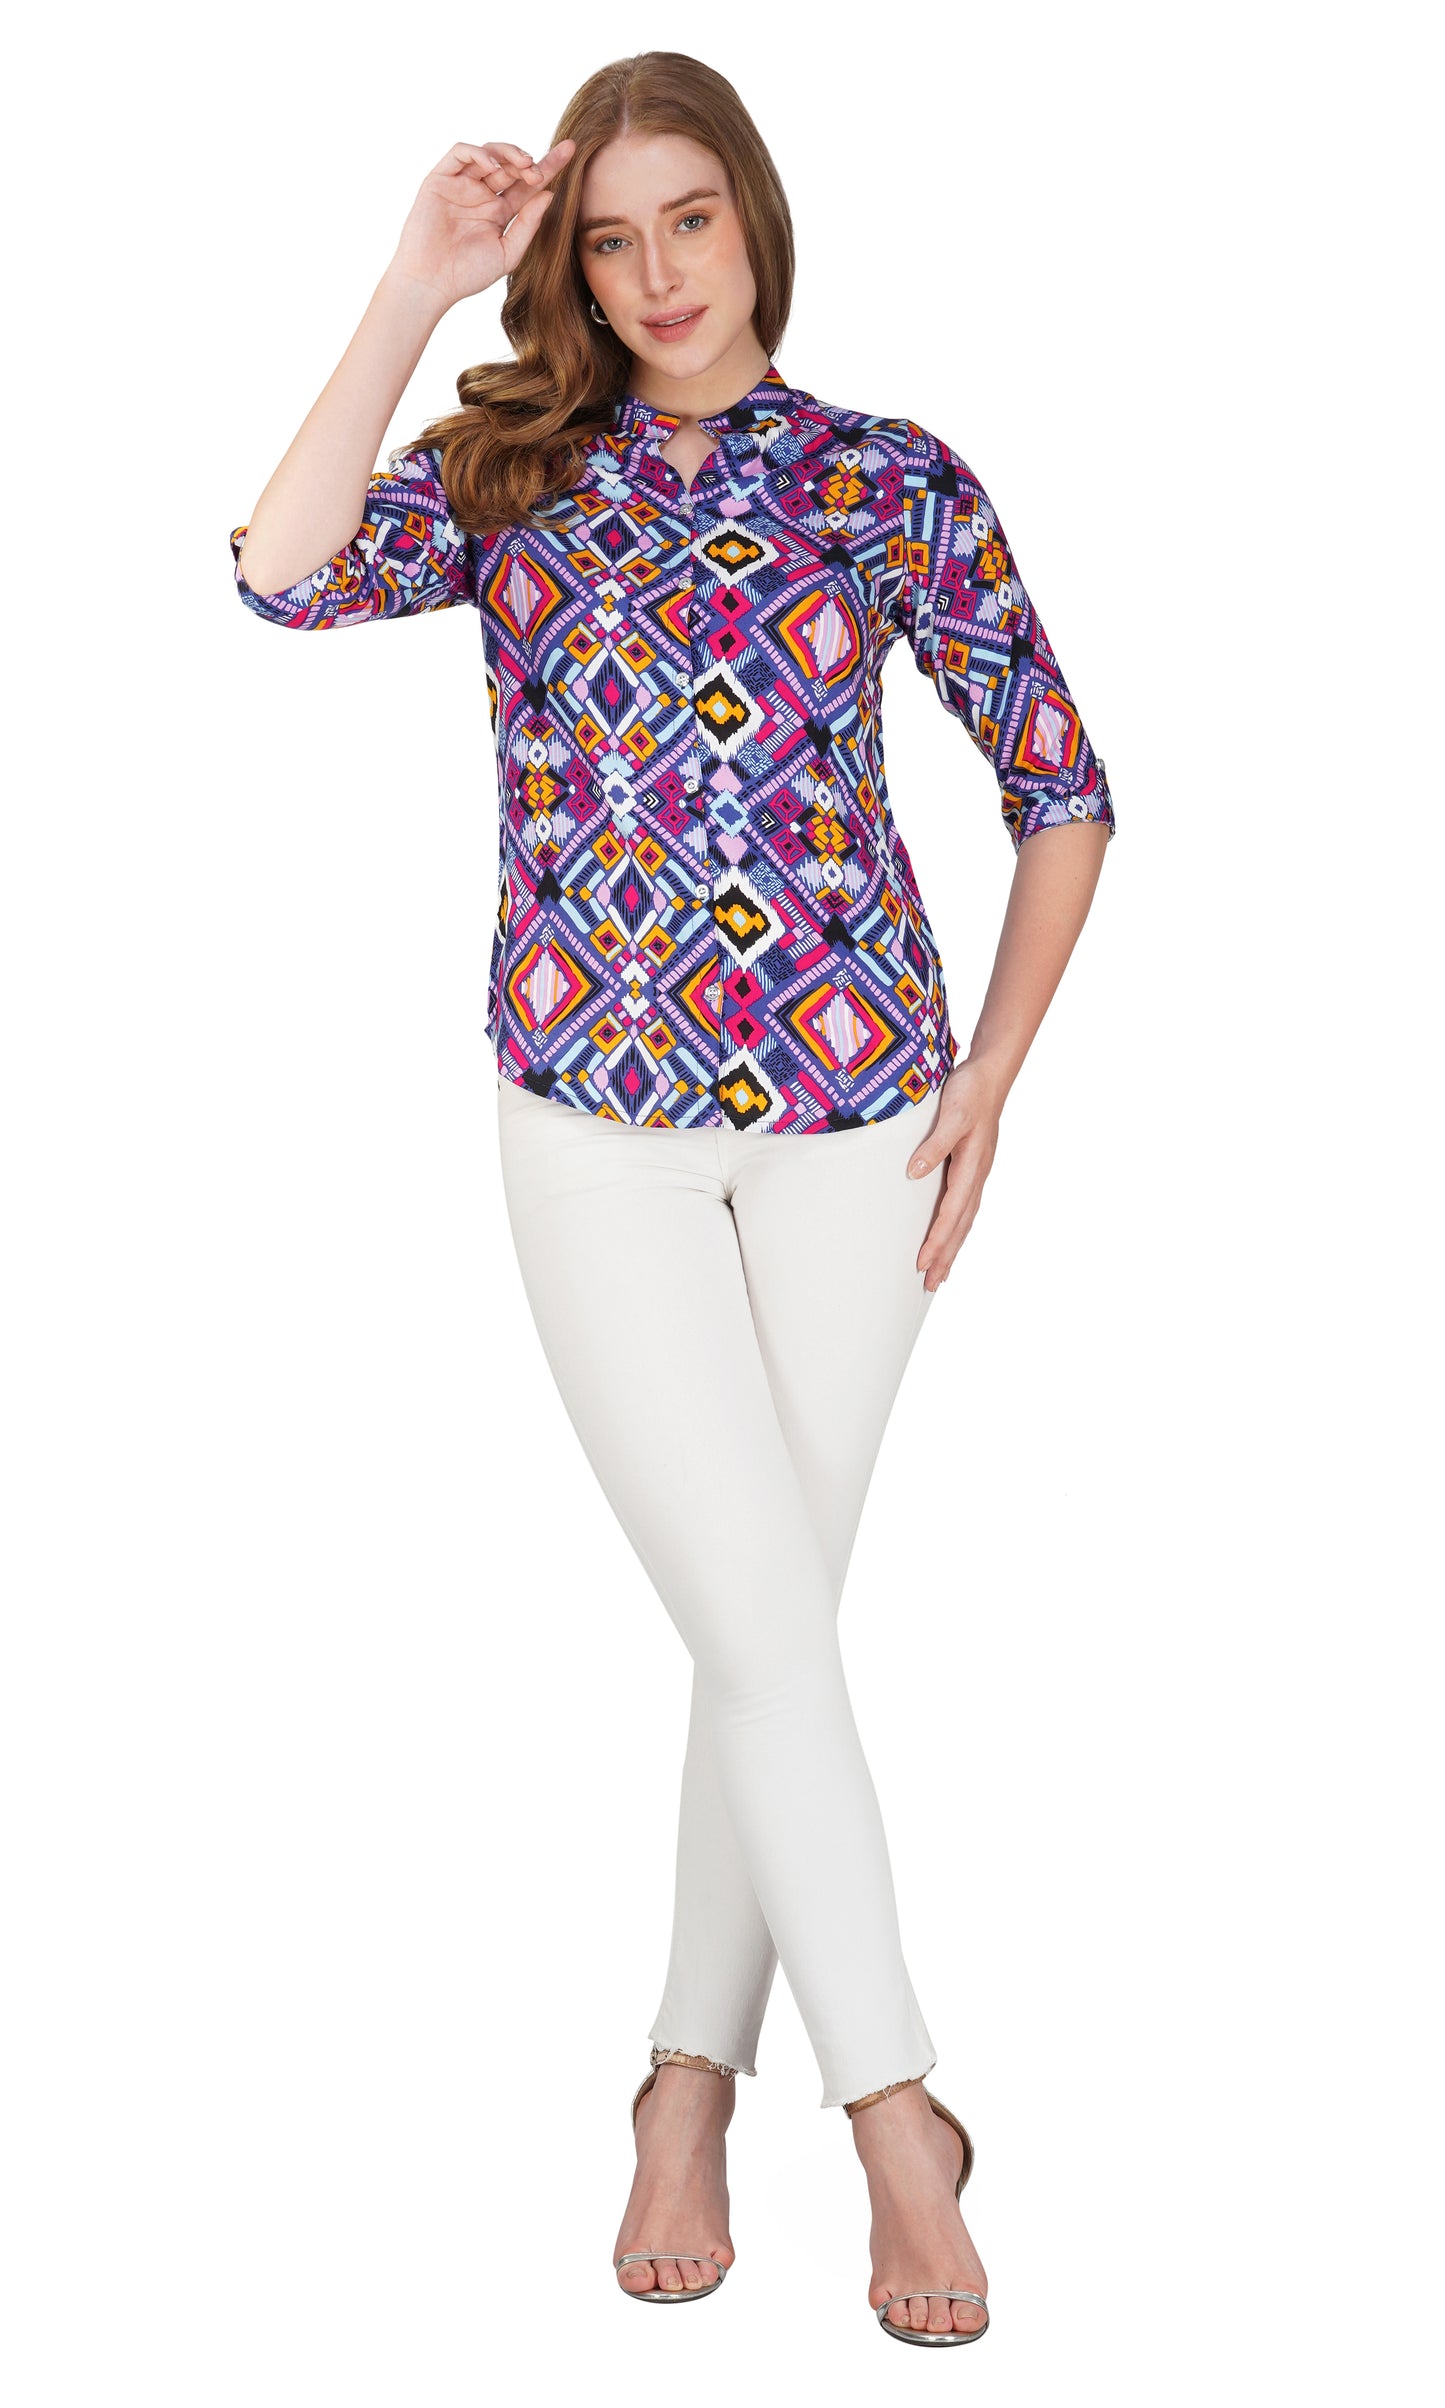 Vatsraa Fusion Women's CottonFestival and Regular Wear Printed Tops